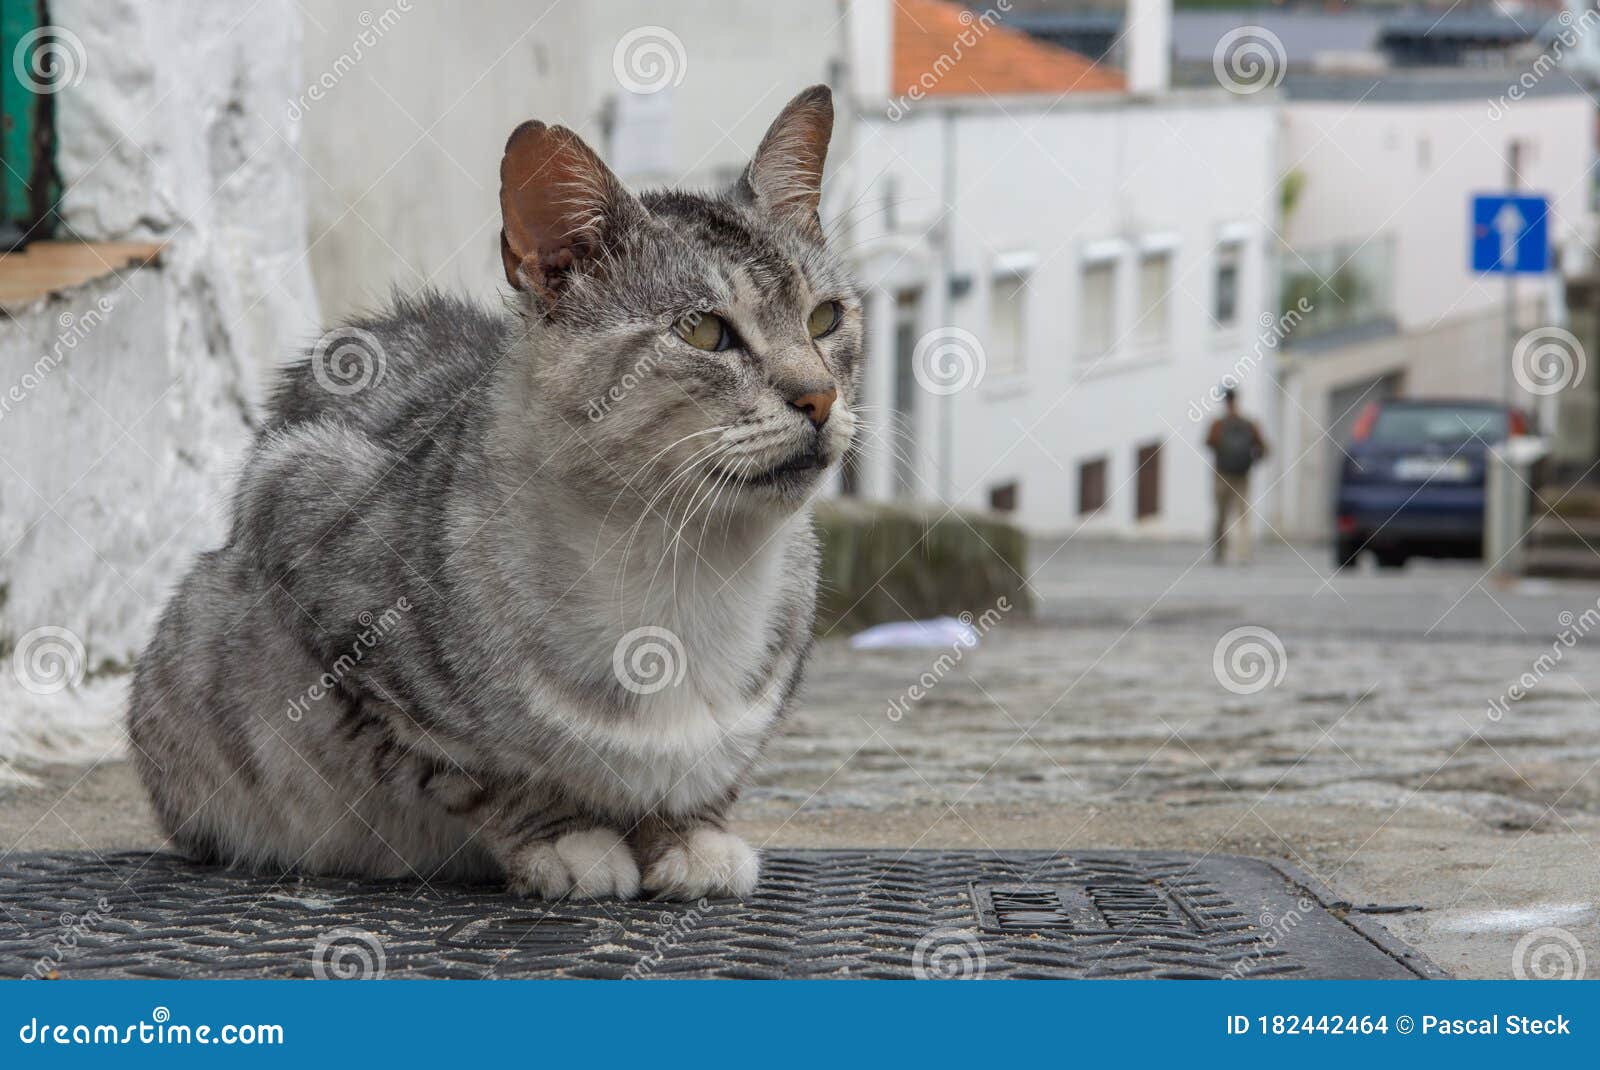 cat sitting on rua barroca in porto